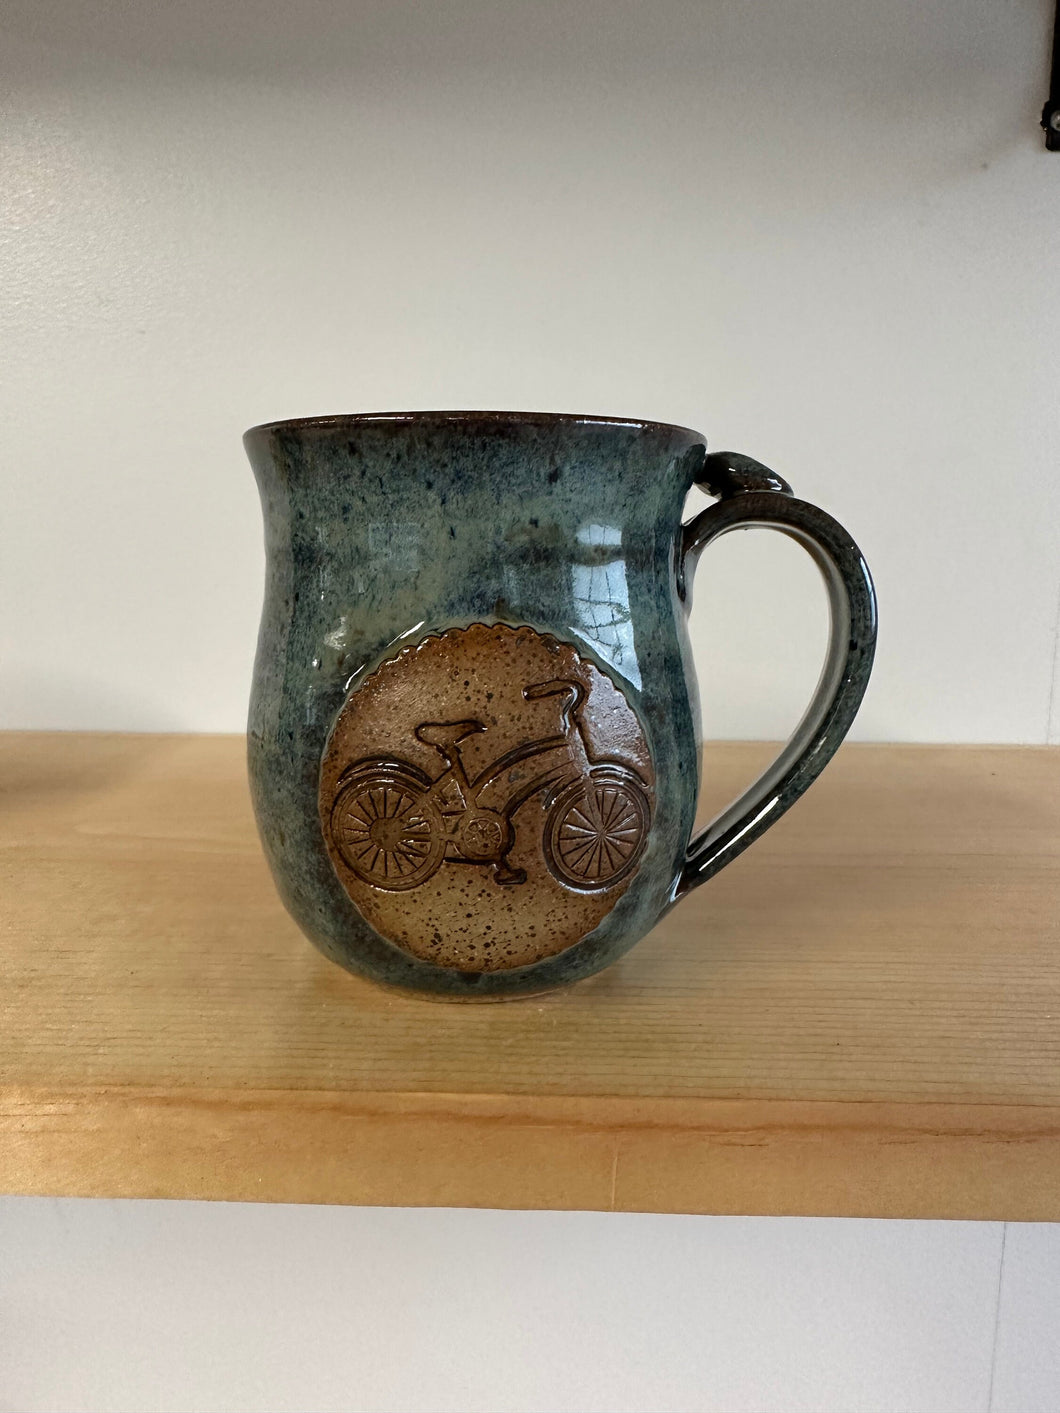 Adventure mug coffee mug bike mountain bike